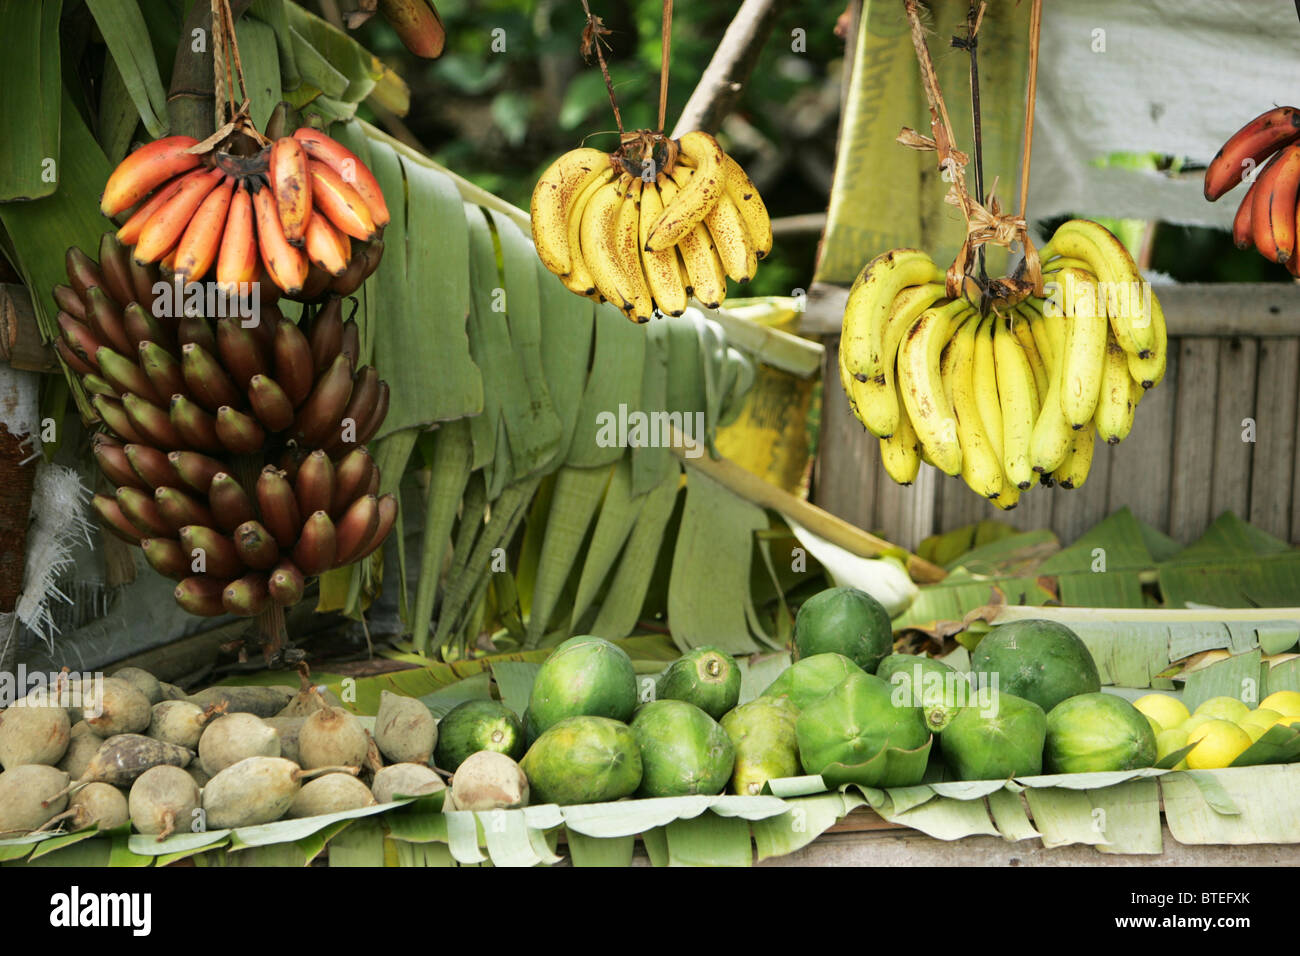 Banana and fruit on display at a rural stall Stock Photo